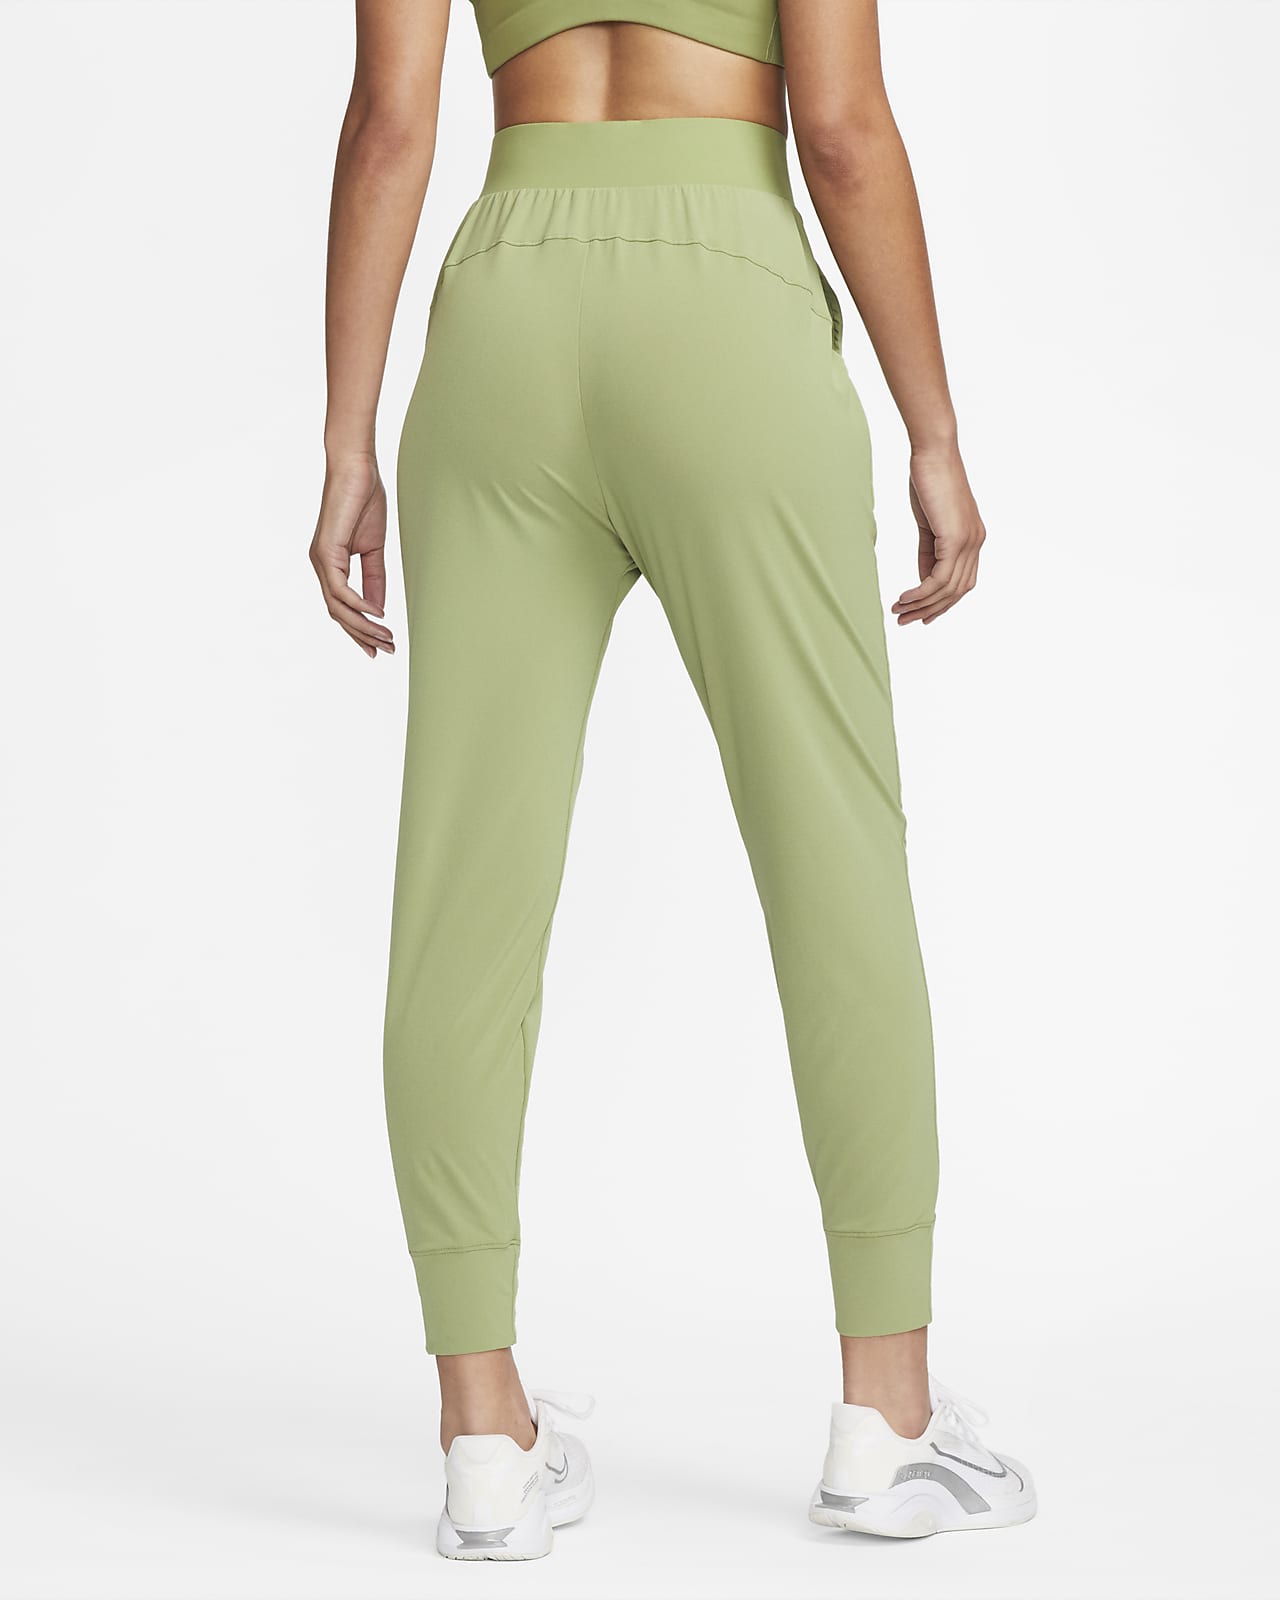 Pantalones entrenamiento para mujer Nike Bliss. Nike.com